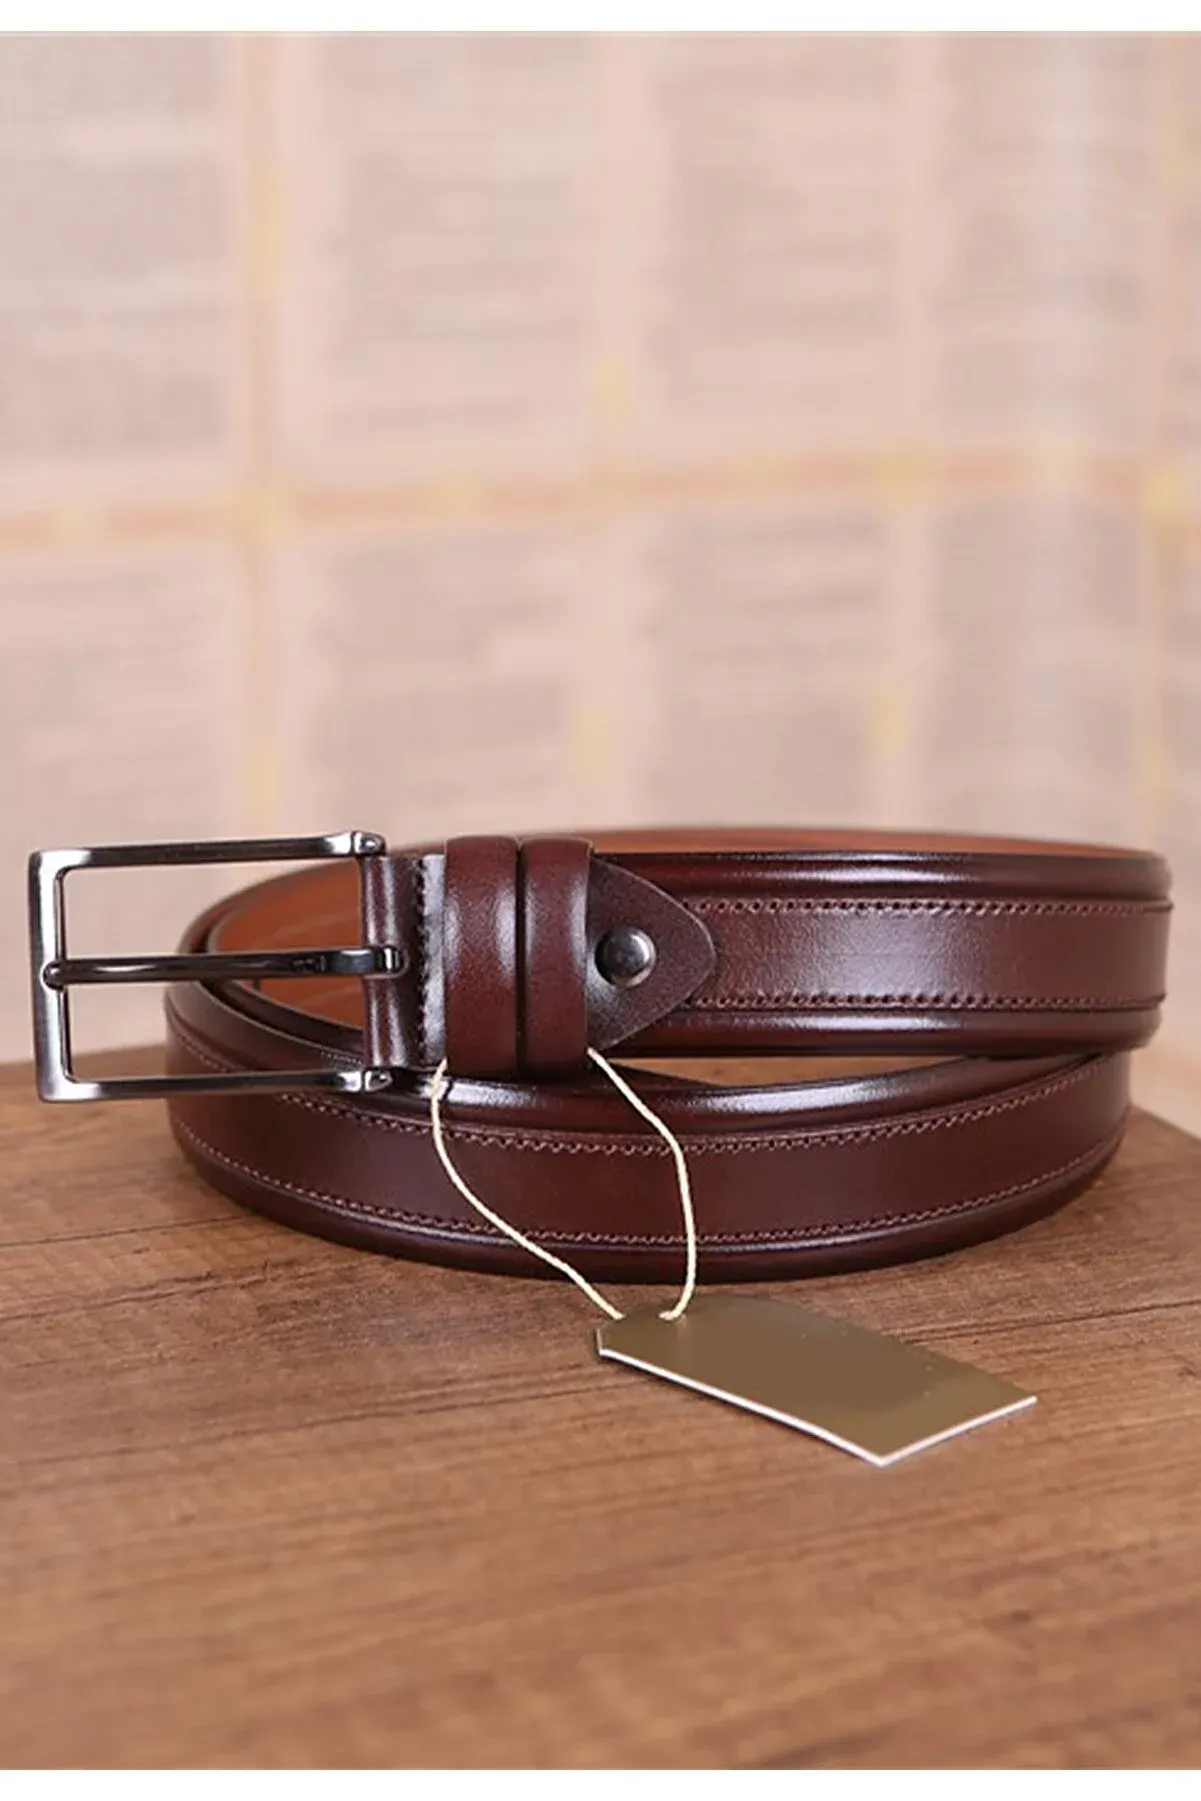 Men's Belts  Mens belts, Belt, Leather